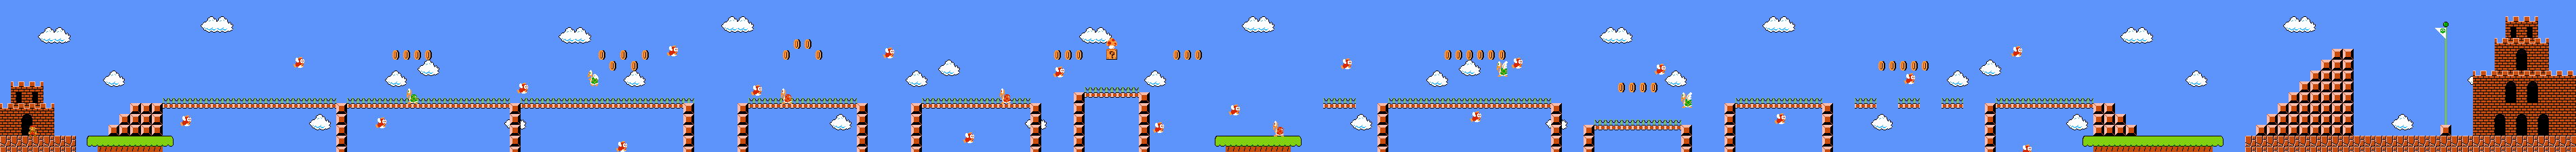 Mario Level Background